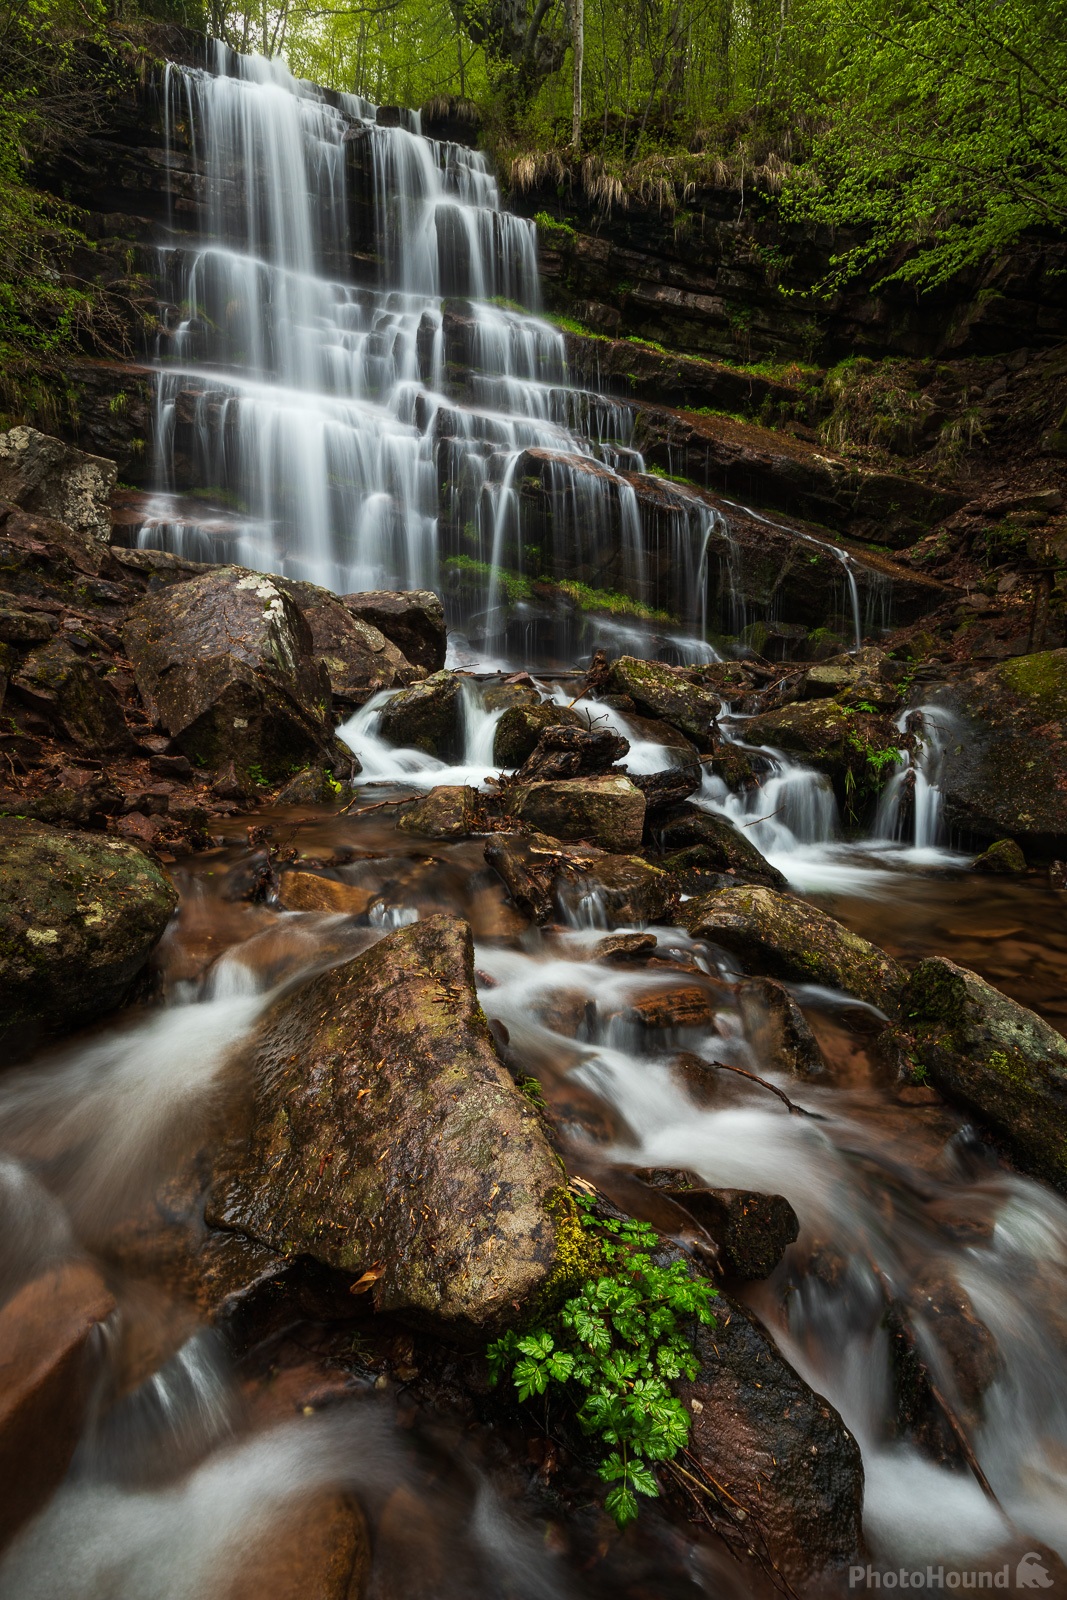 Image of Tupavica waterfall by Daniel Knezevic